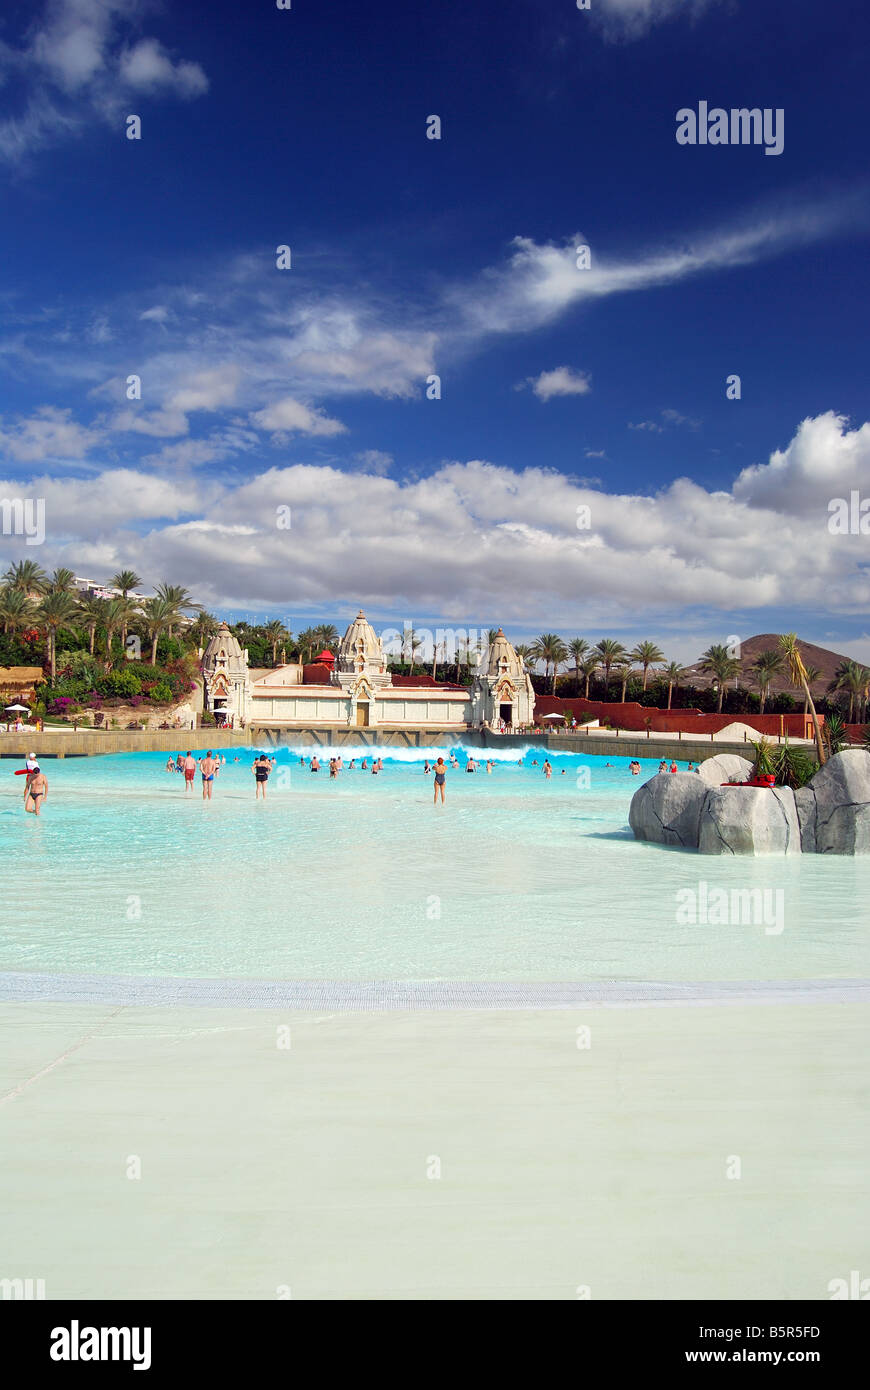 Palazzo d'onda Laguna, Siam Park Water Kingdom Theme Park, Costa Adeje, Tenerife, Isole Canarie, Spagna Foto Stock